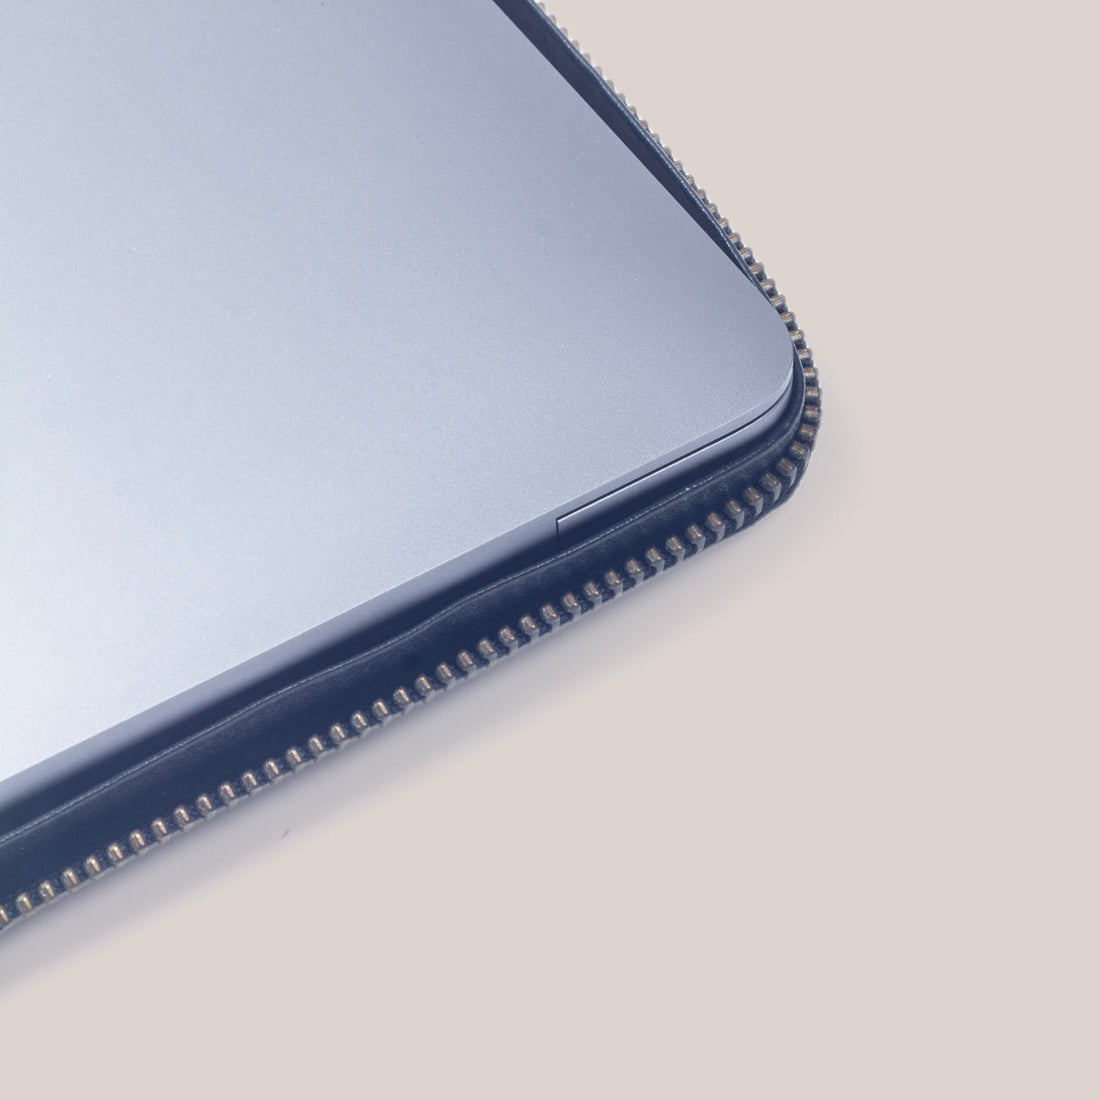 MacBook Air 13 Zippered Laptop Case - Onyx Black